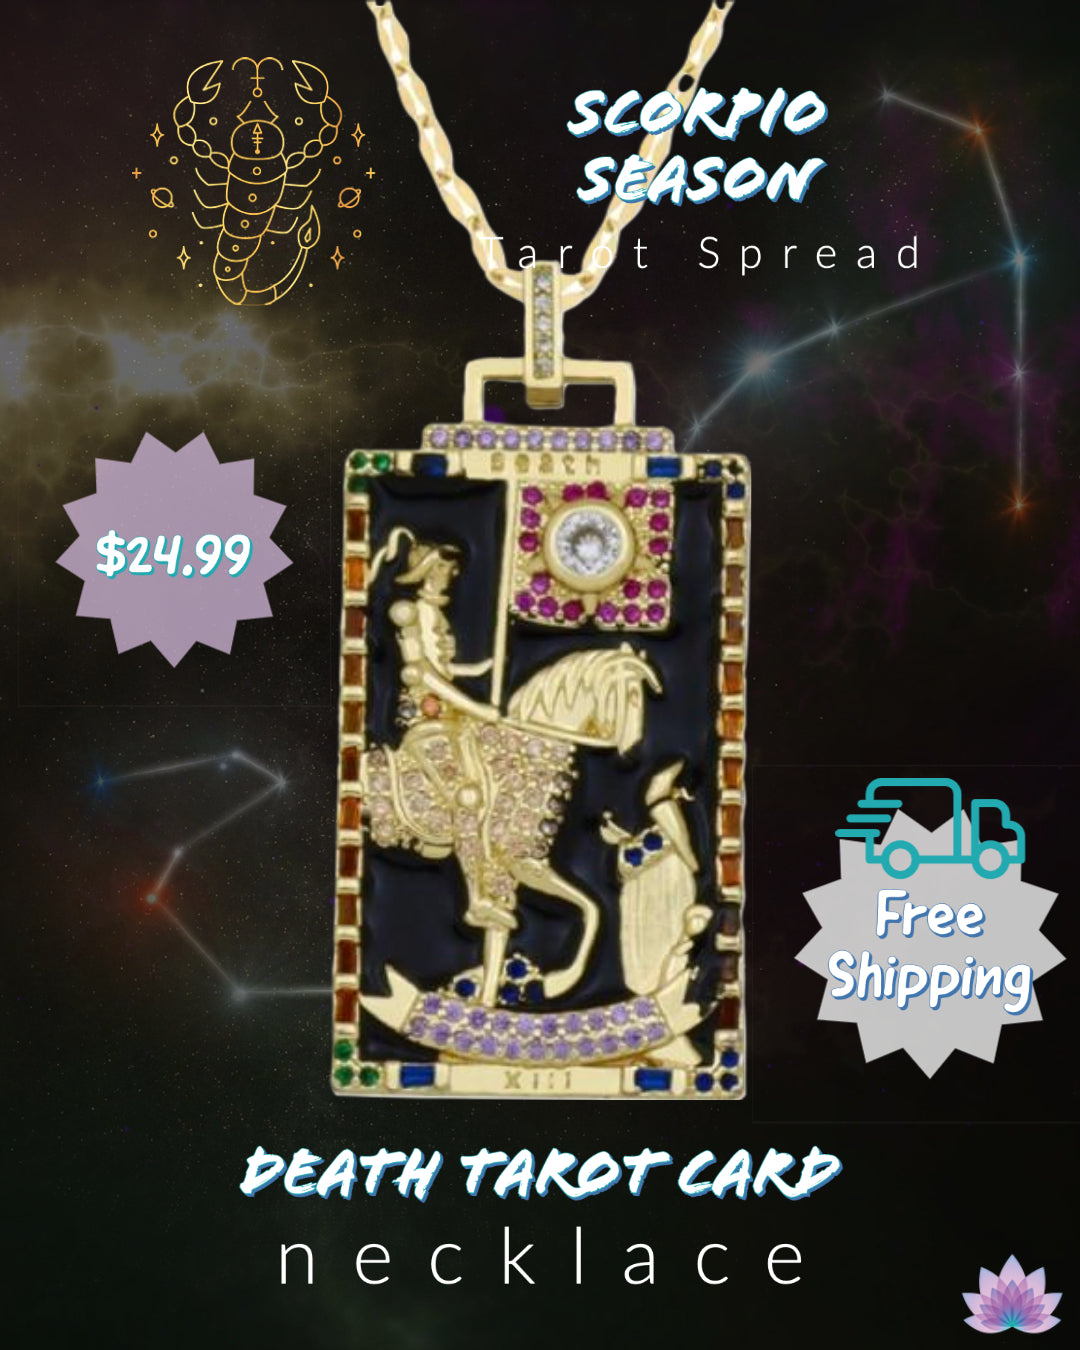 Death Tarot Card Necklace | Scorpio Season 2021 Tarot Spread | Apollo Tarot